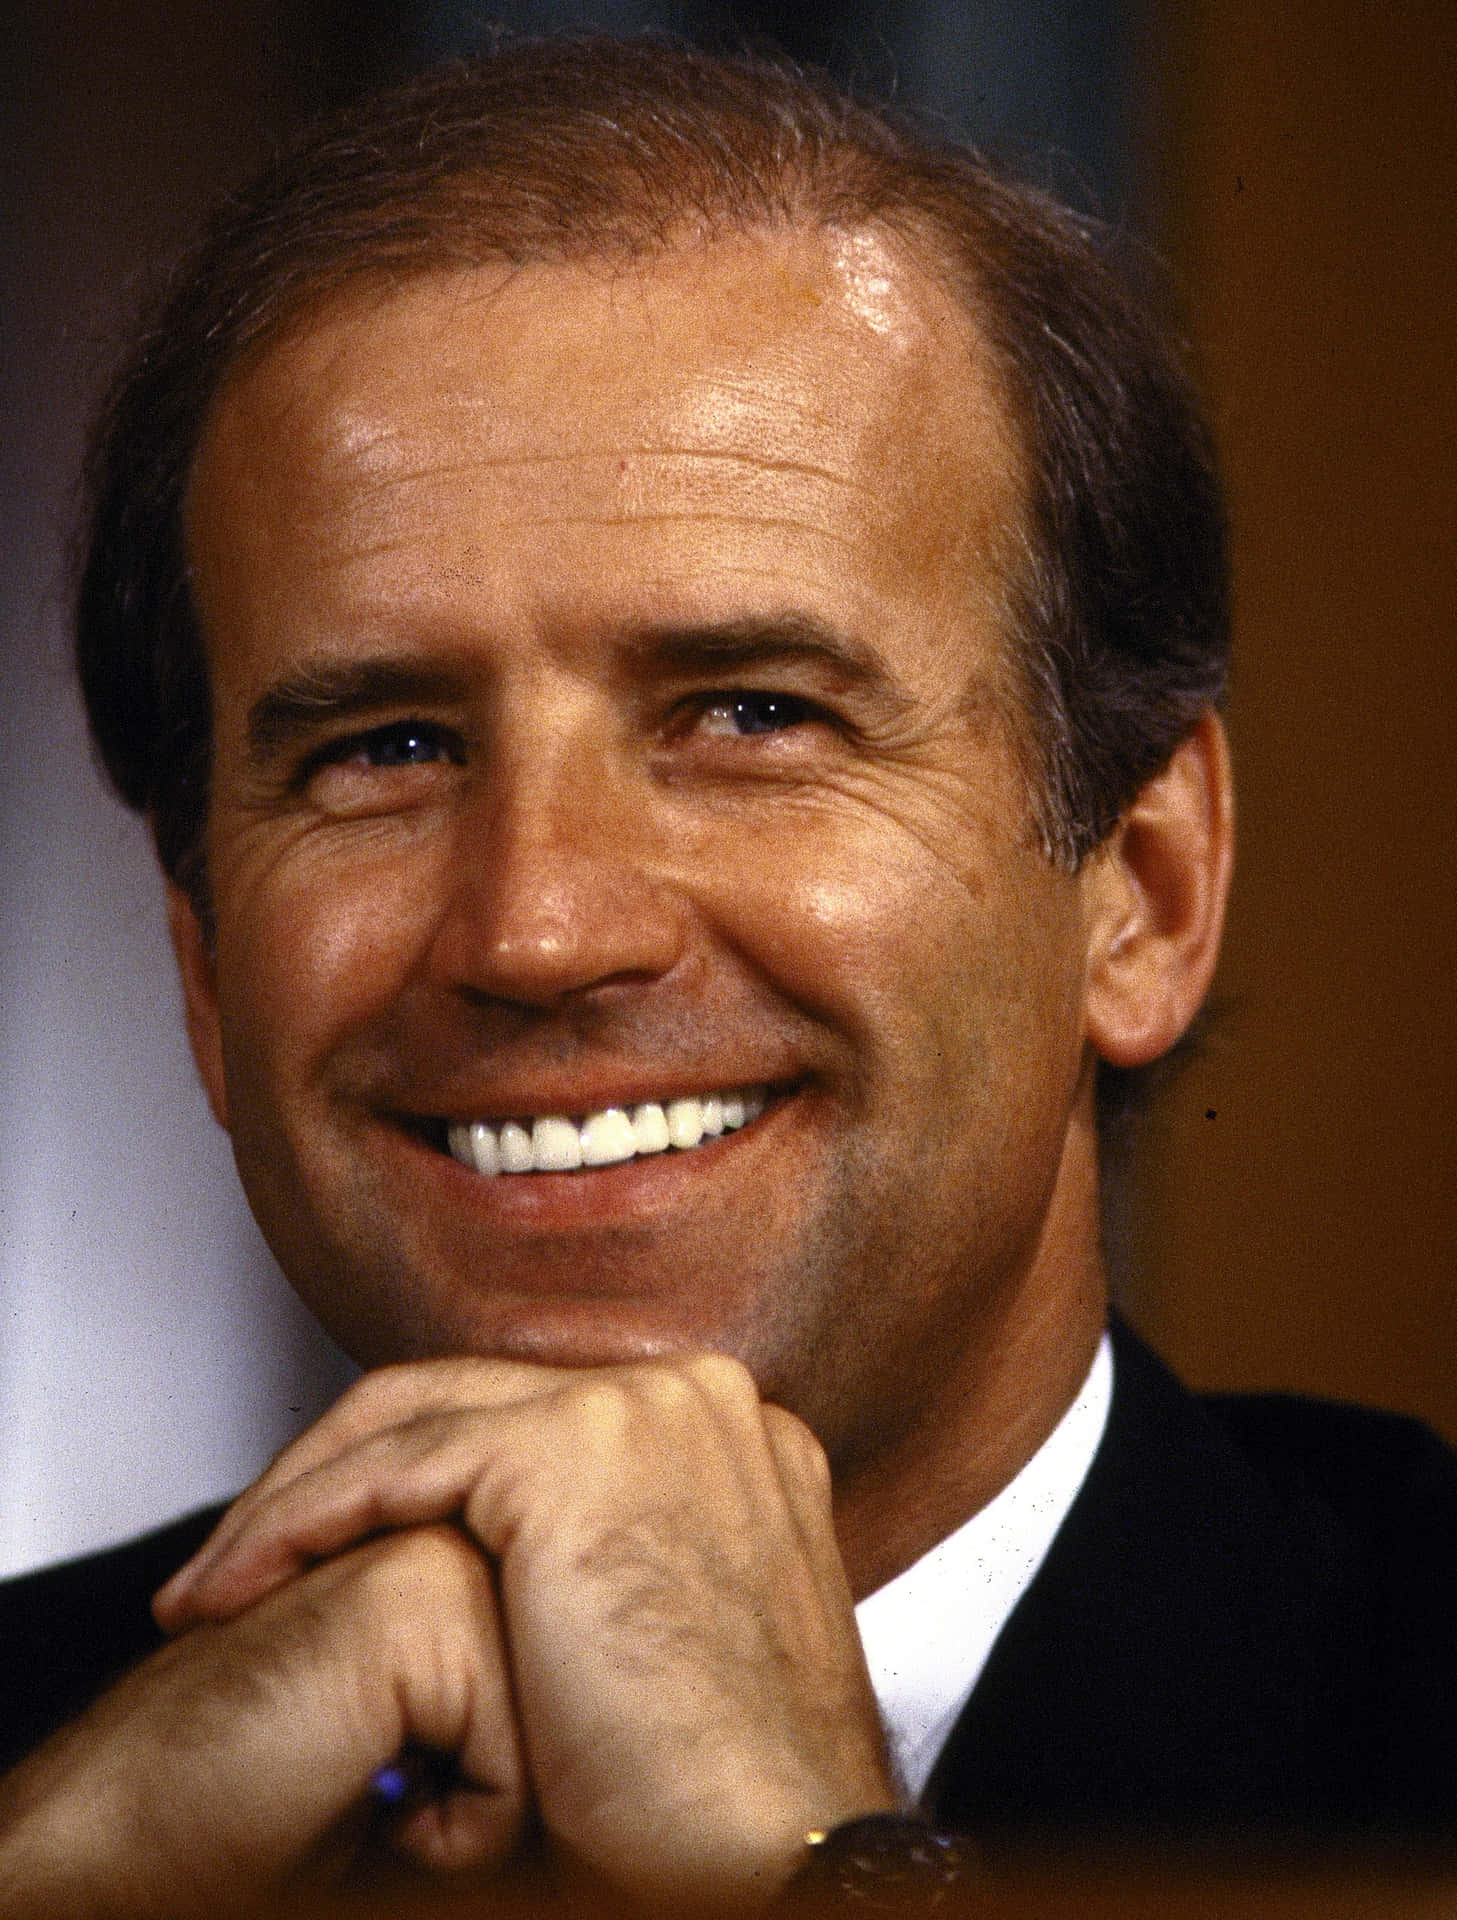 Joe Biden, 46th US President